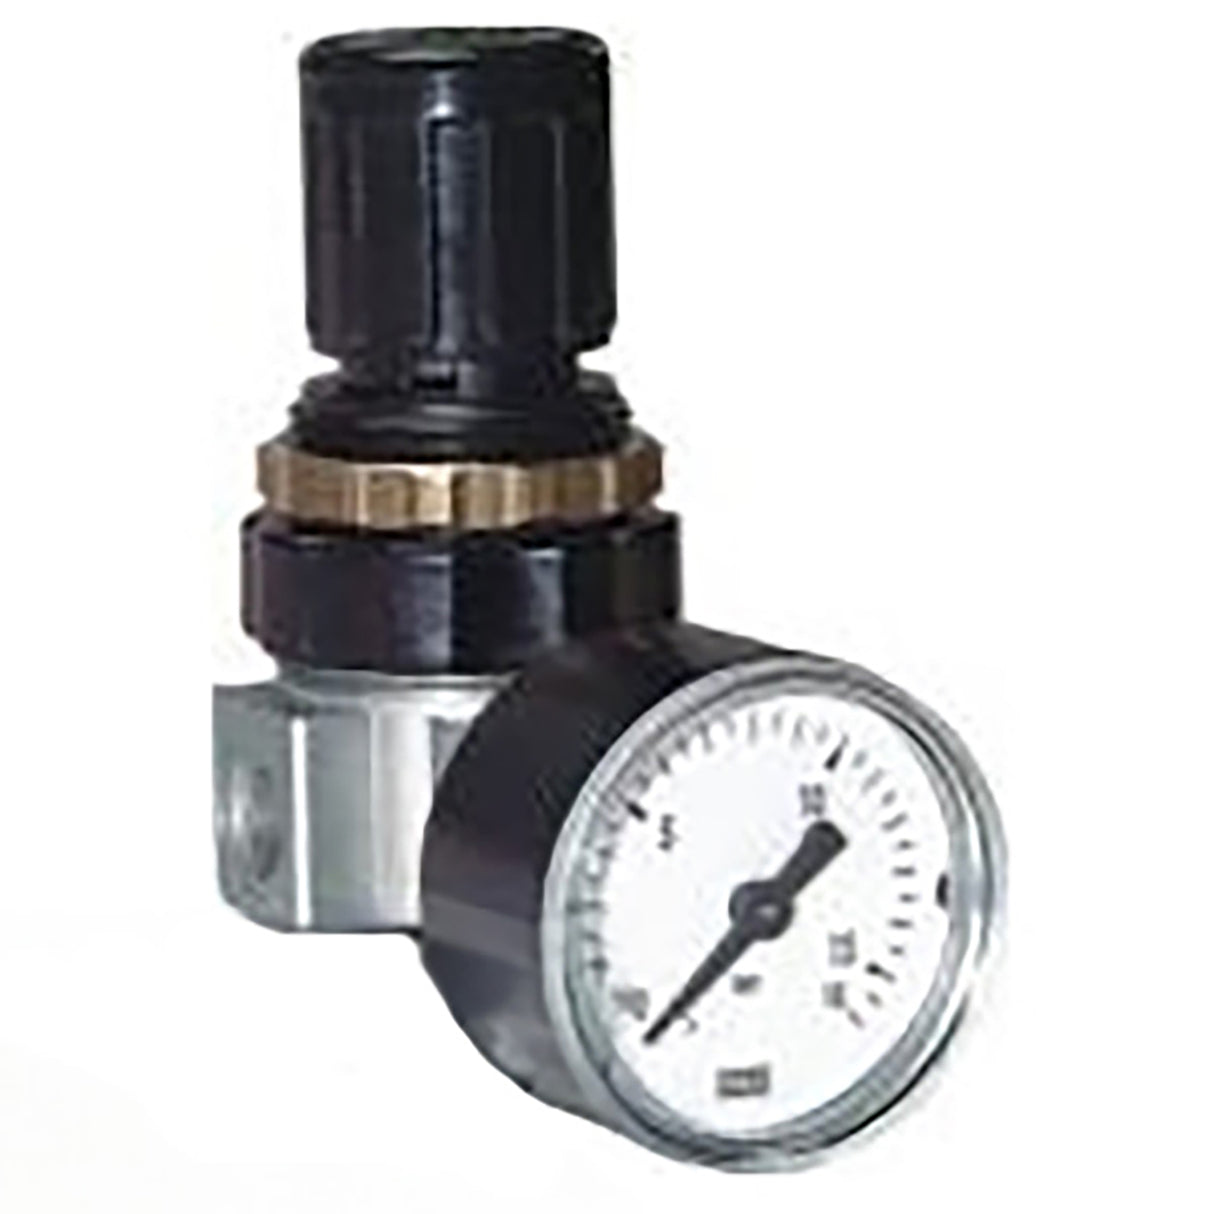 Pressure regulator Mini 05-10 Bar